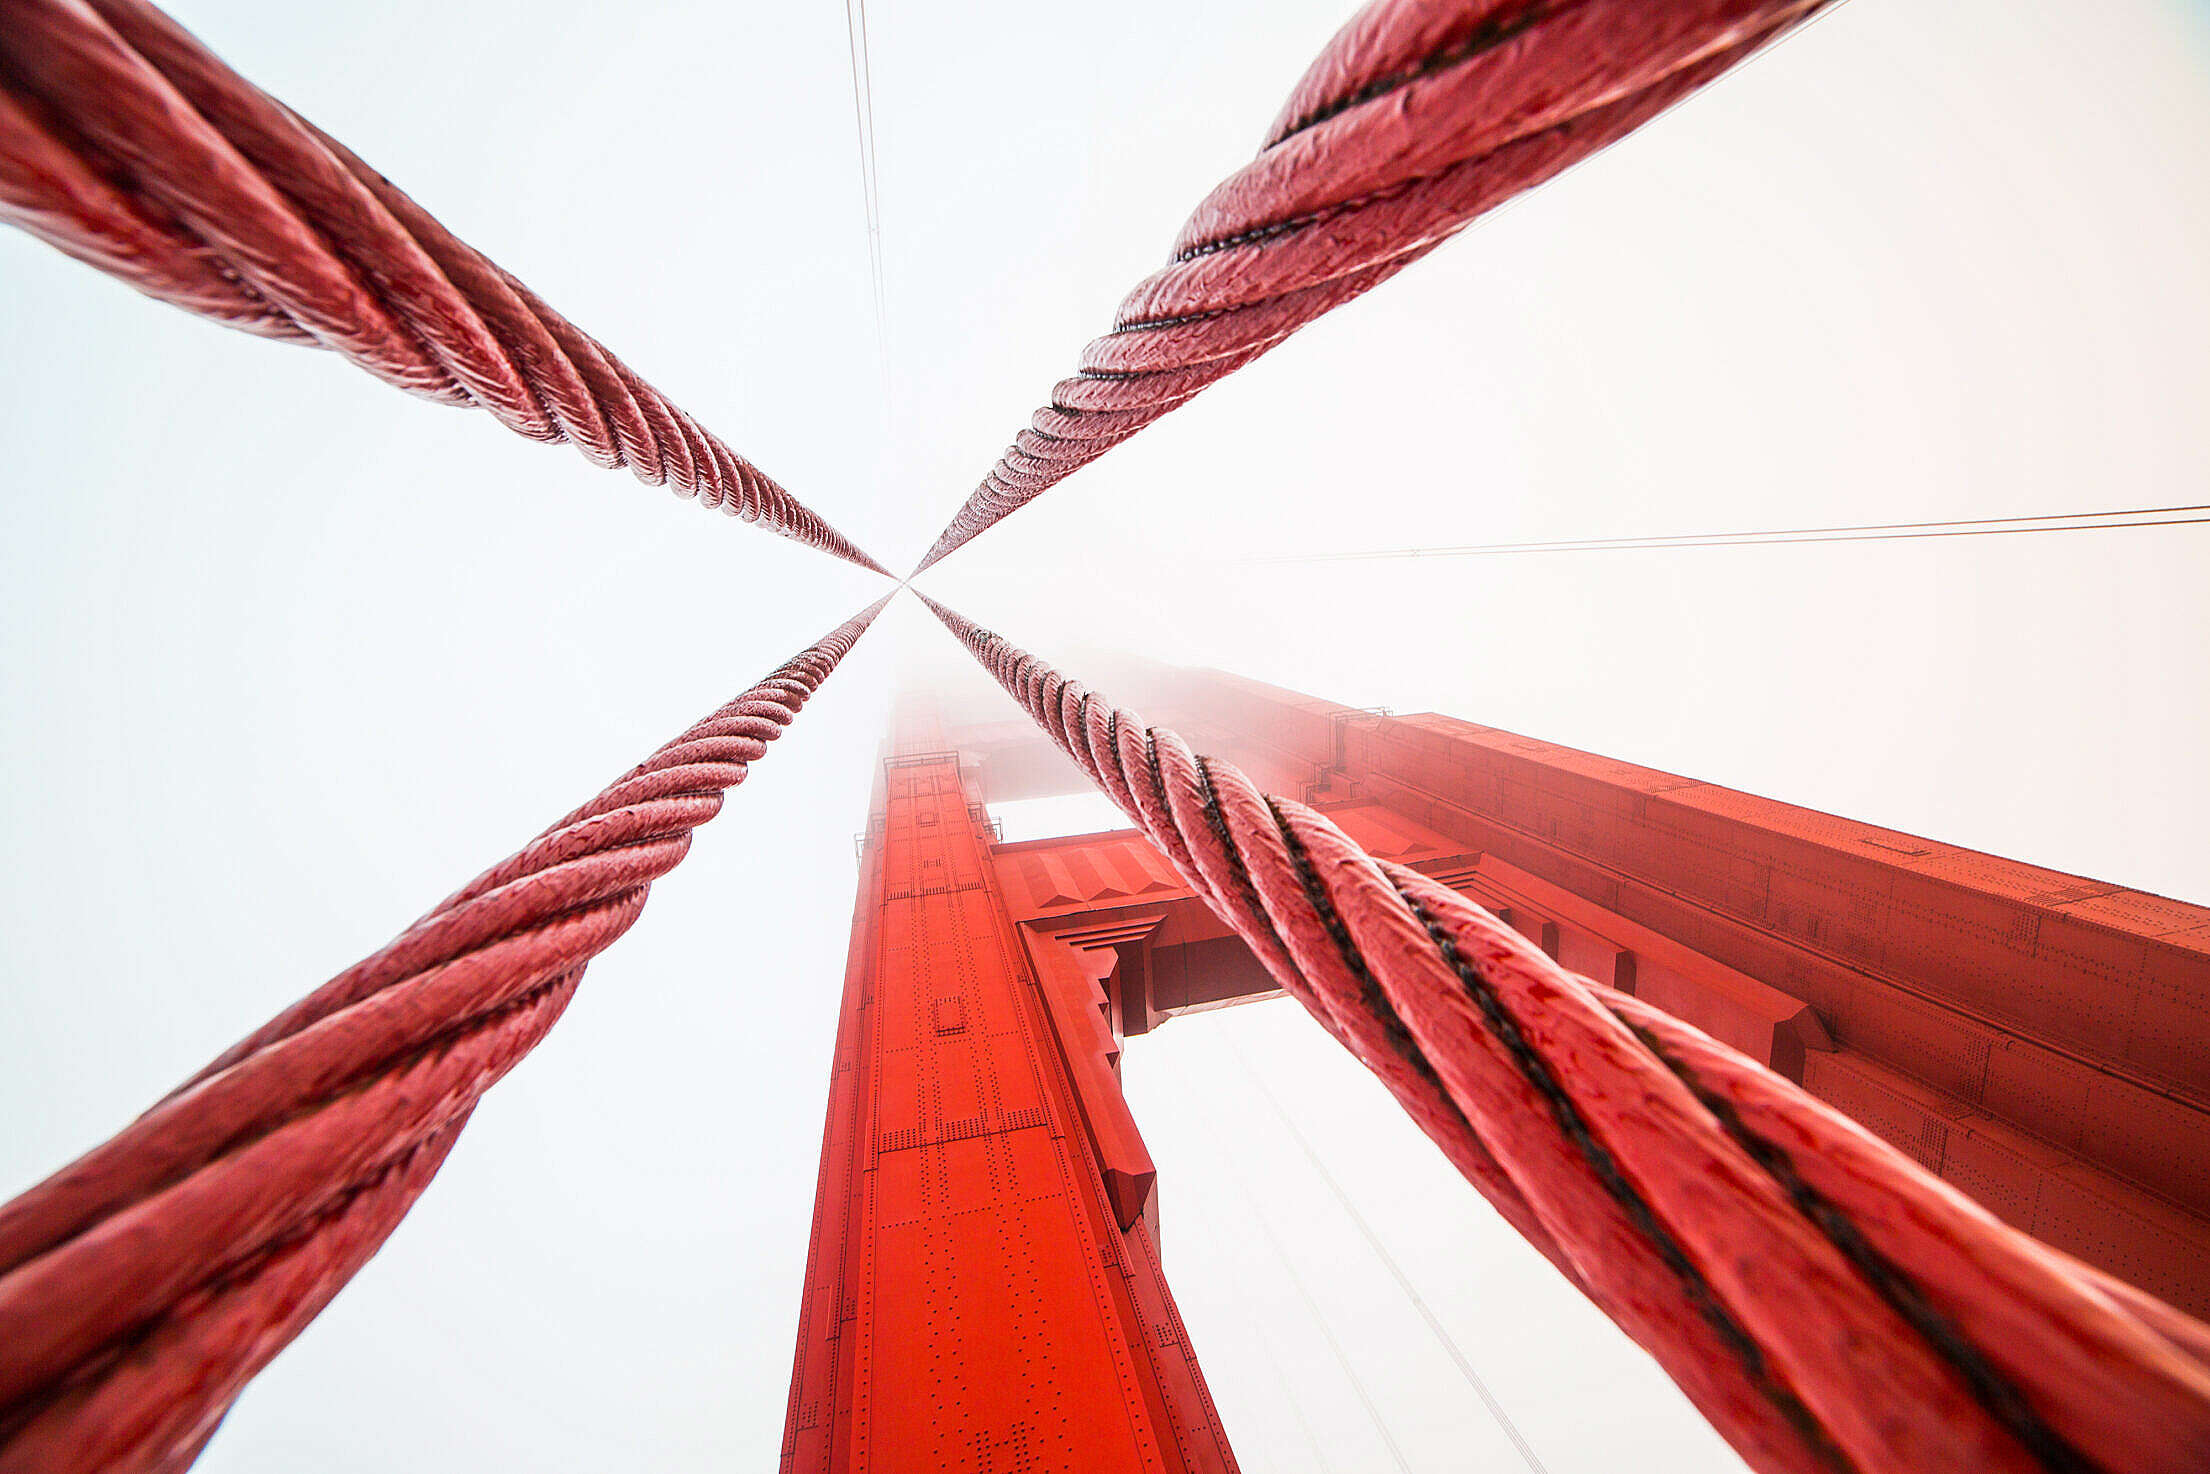 Ropes on The Golden Gate Bridge in San Francisco Free Stock Photo